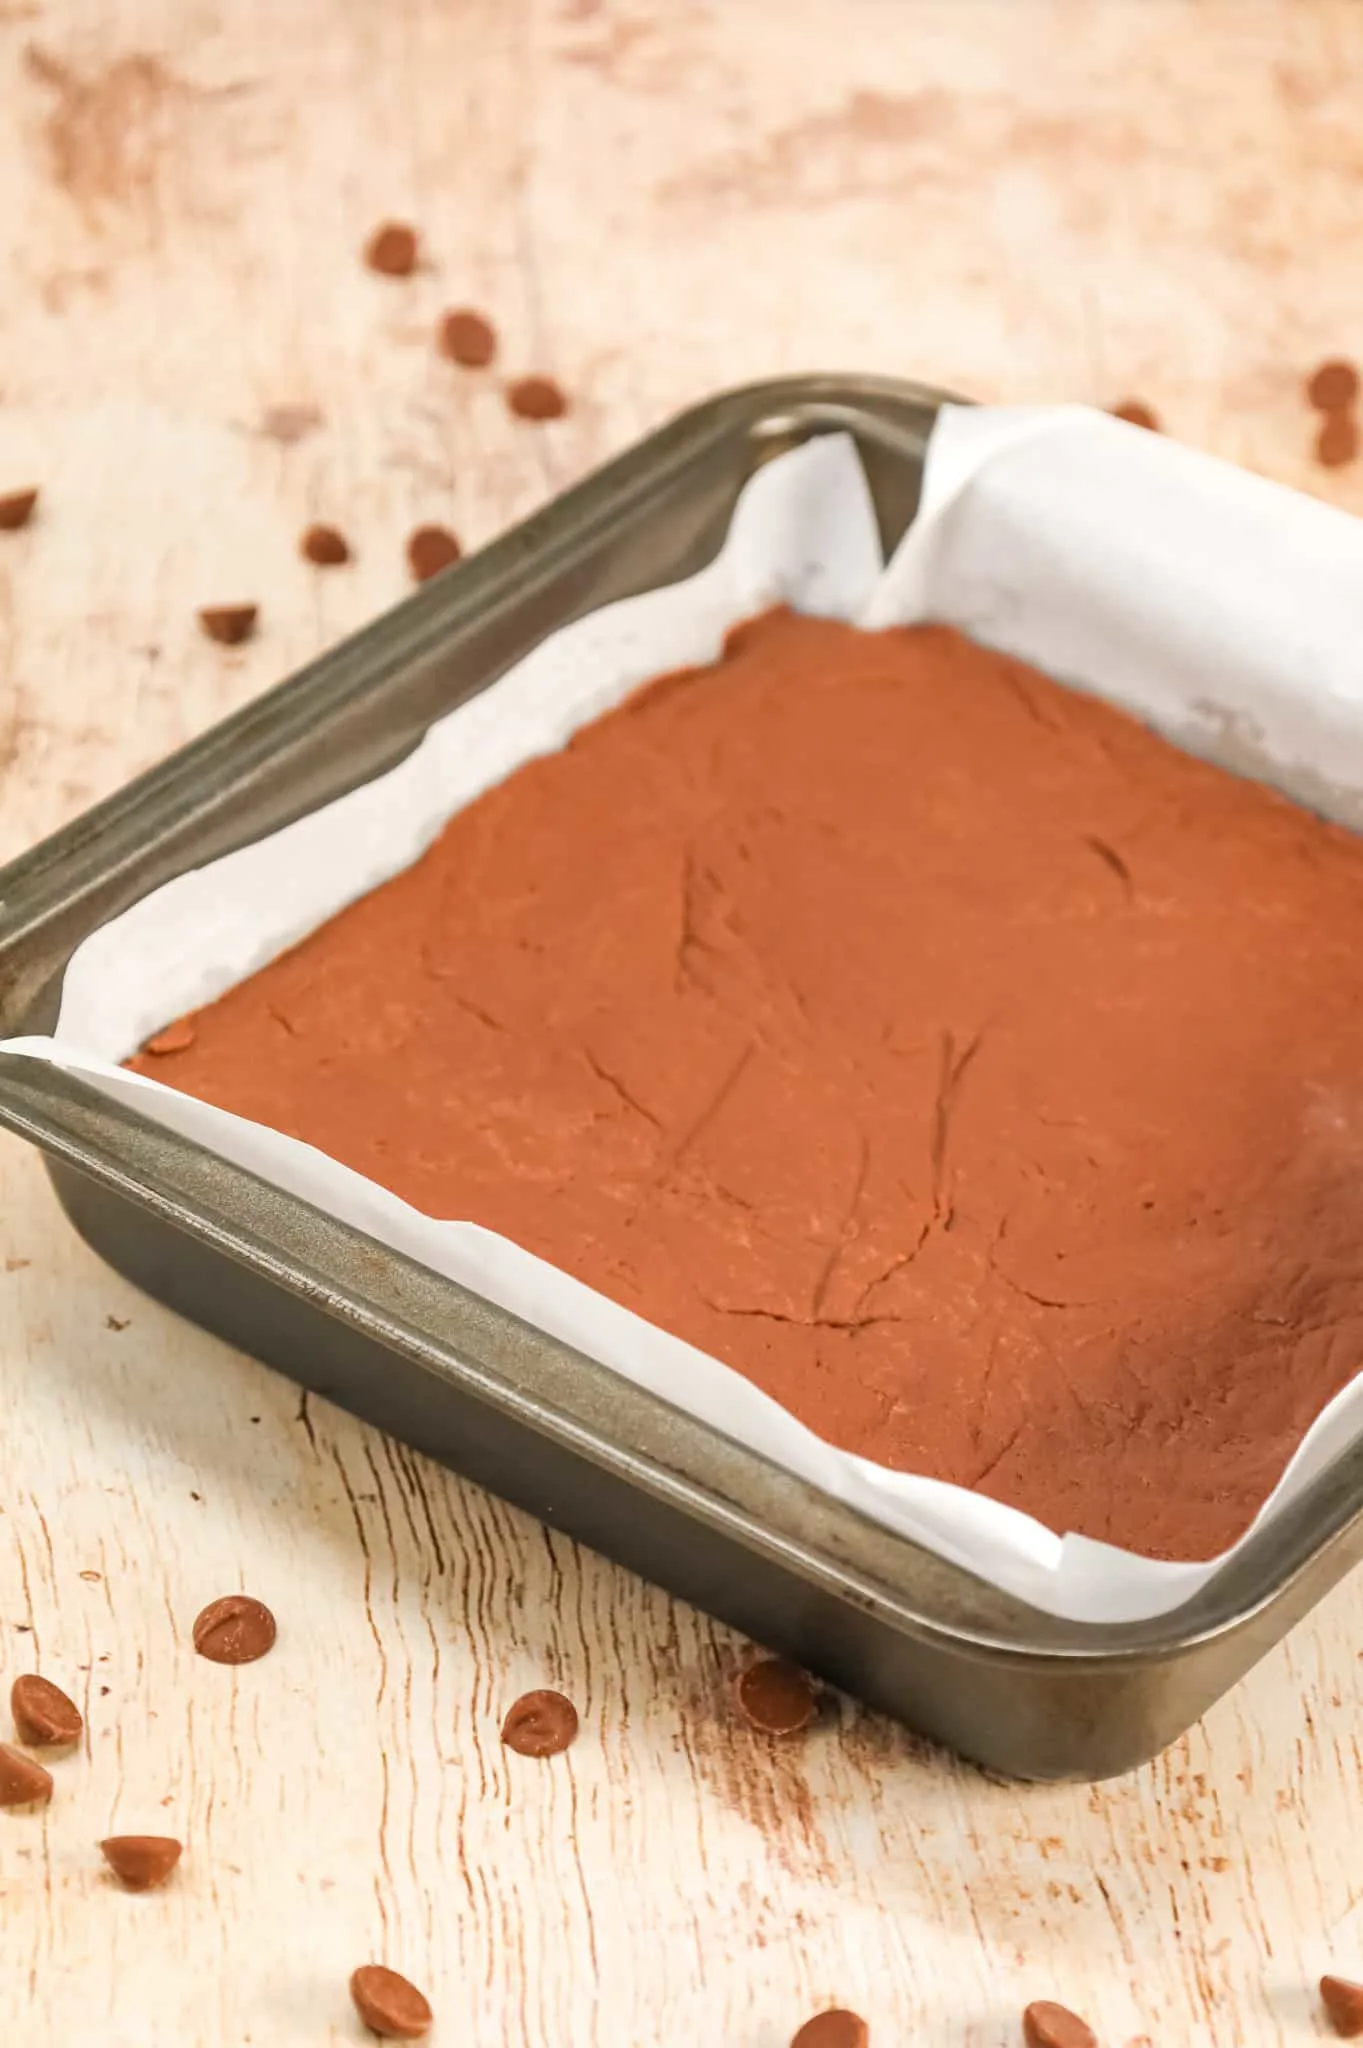 2 Ingredient Fudge is an easy microwave fudge recipe using sweetened condensed milk and milk chocolate chips.